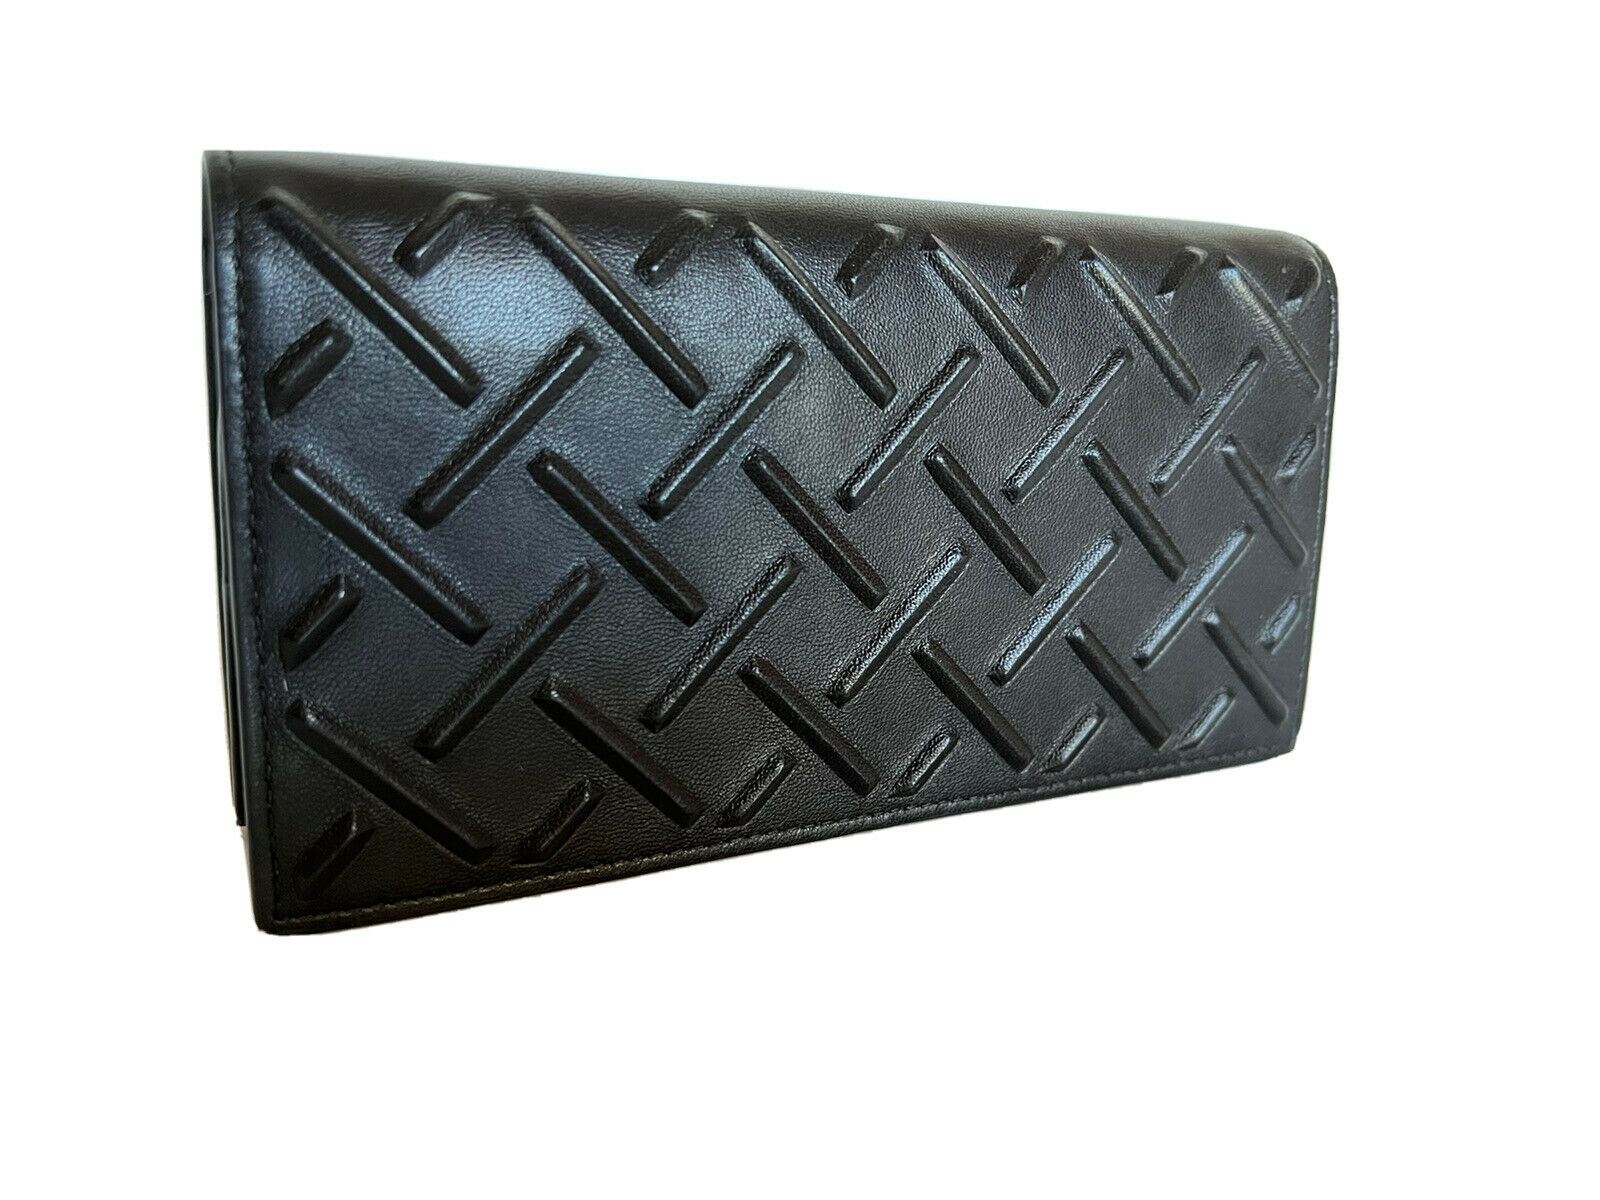 NWT $760 Bottega Veneta Nappa19 Leather Card Holder Wallet Black 591365 Italy